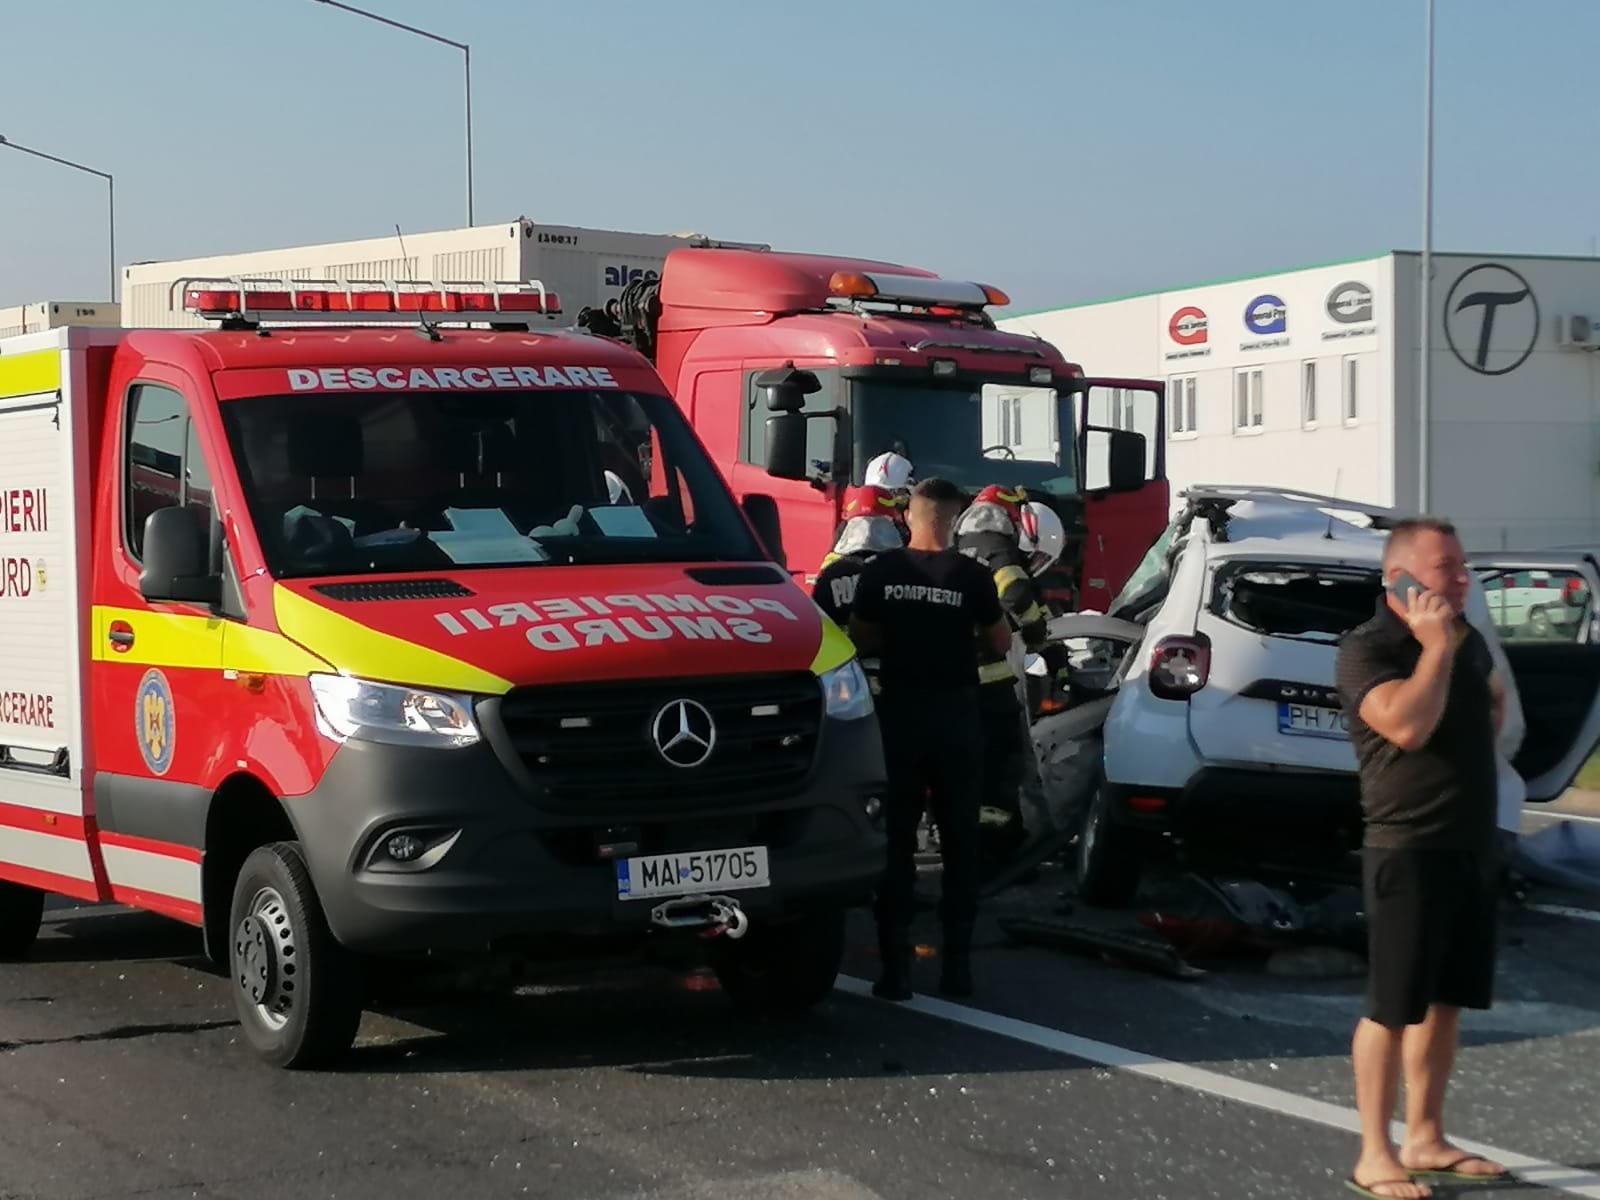 Auckland Inn Engineers Grav accident rutier la Sibiu: Patru persoane decedate - VIDEO